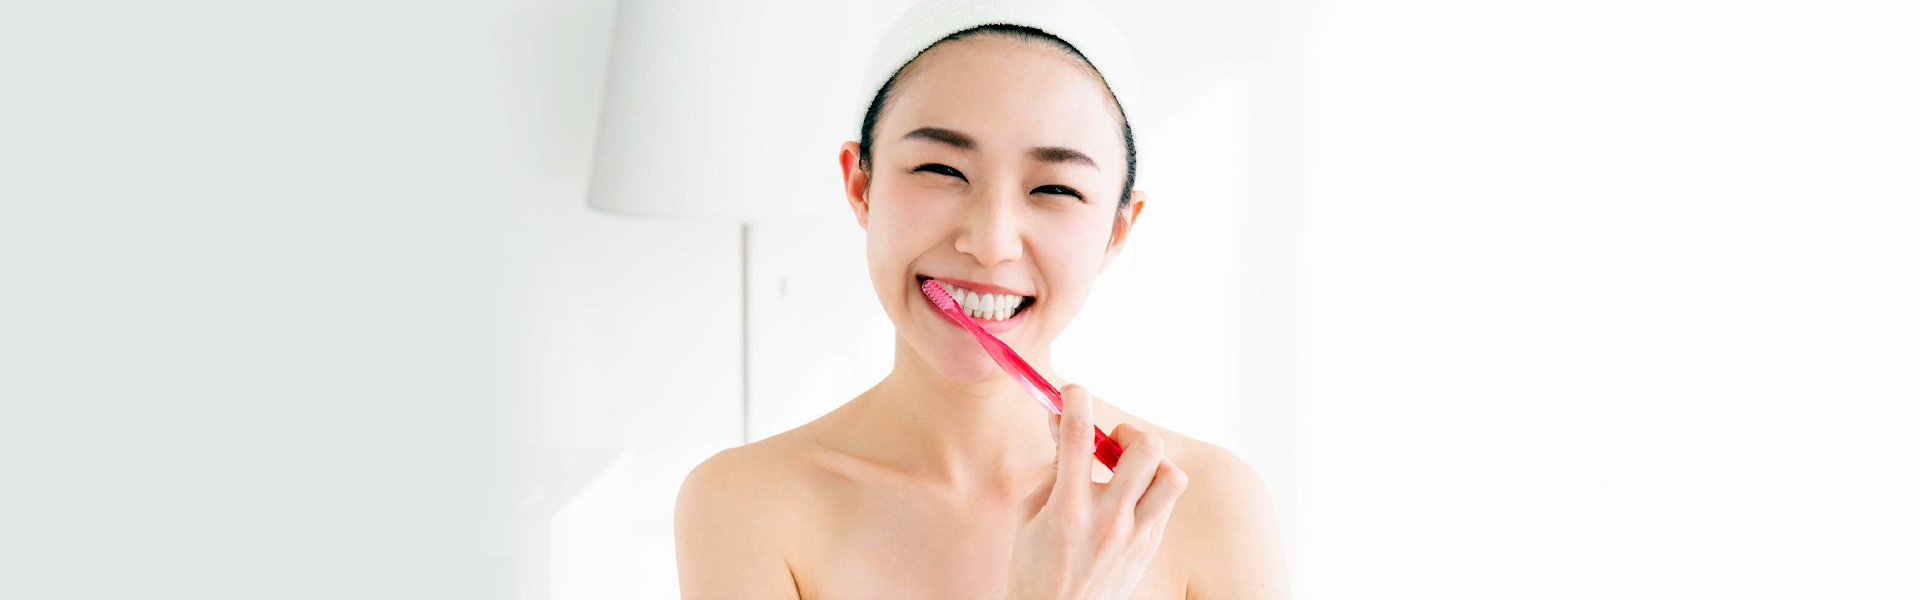 Home Teeth Whitening Vs. Professional Teeth Whitening